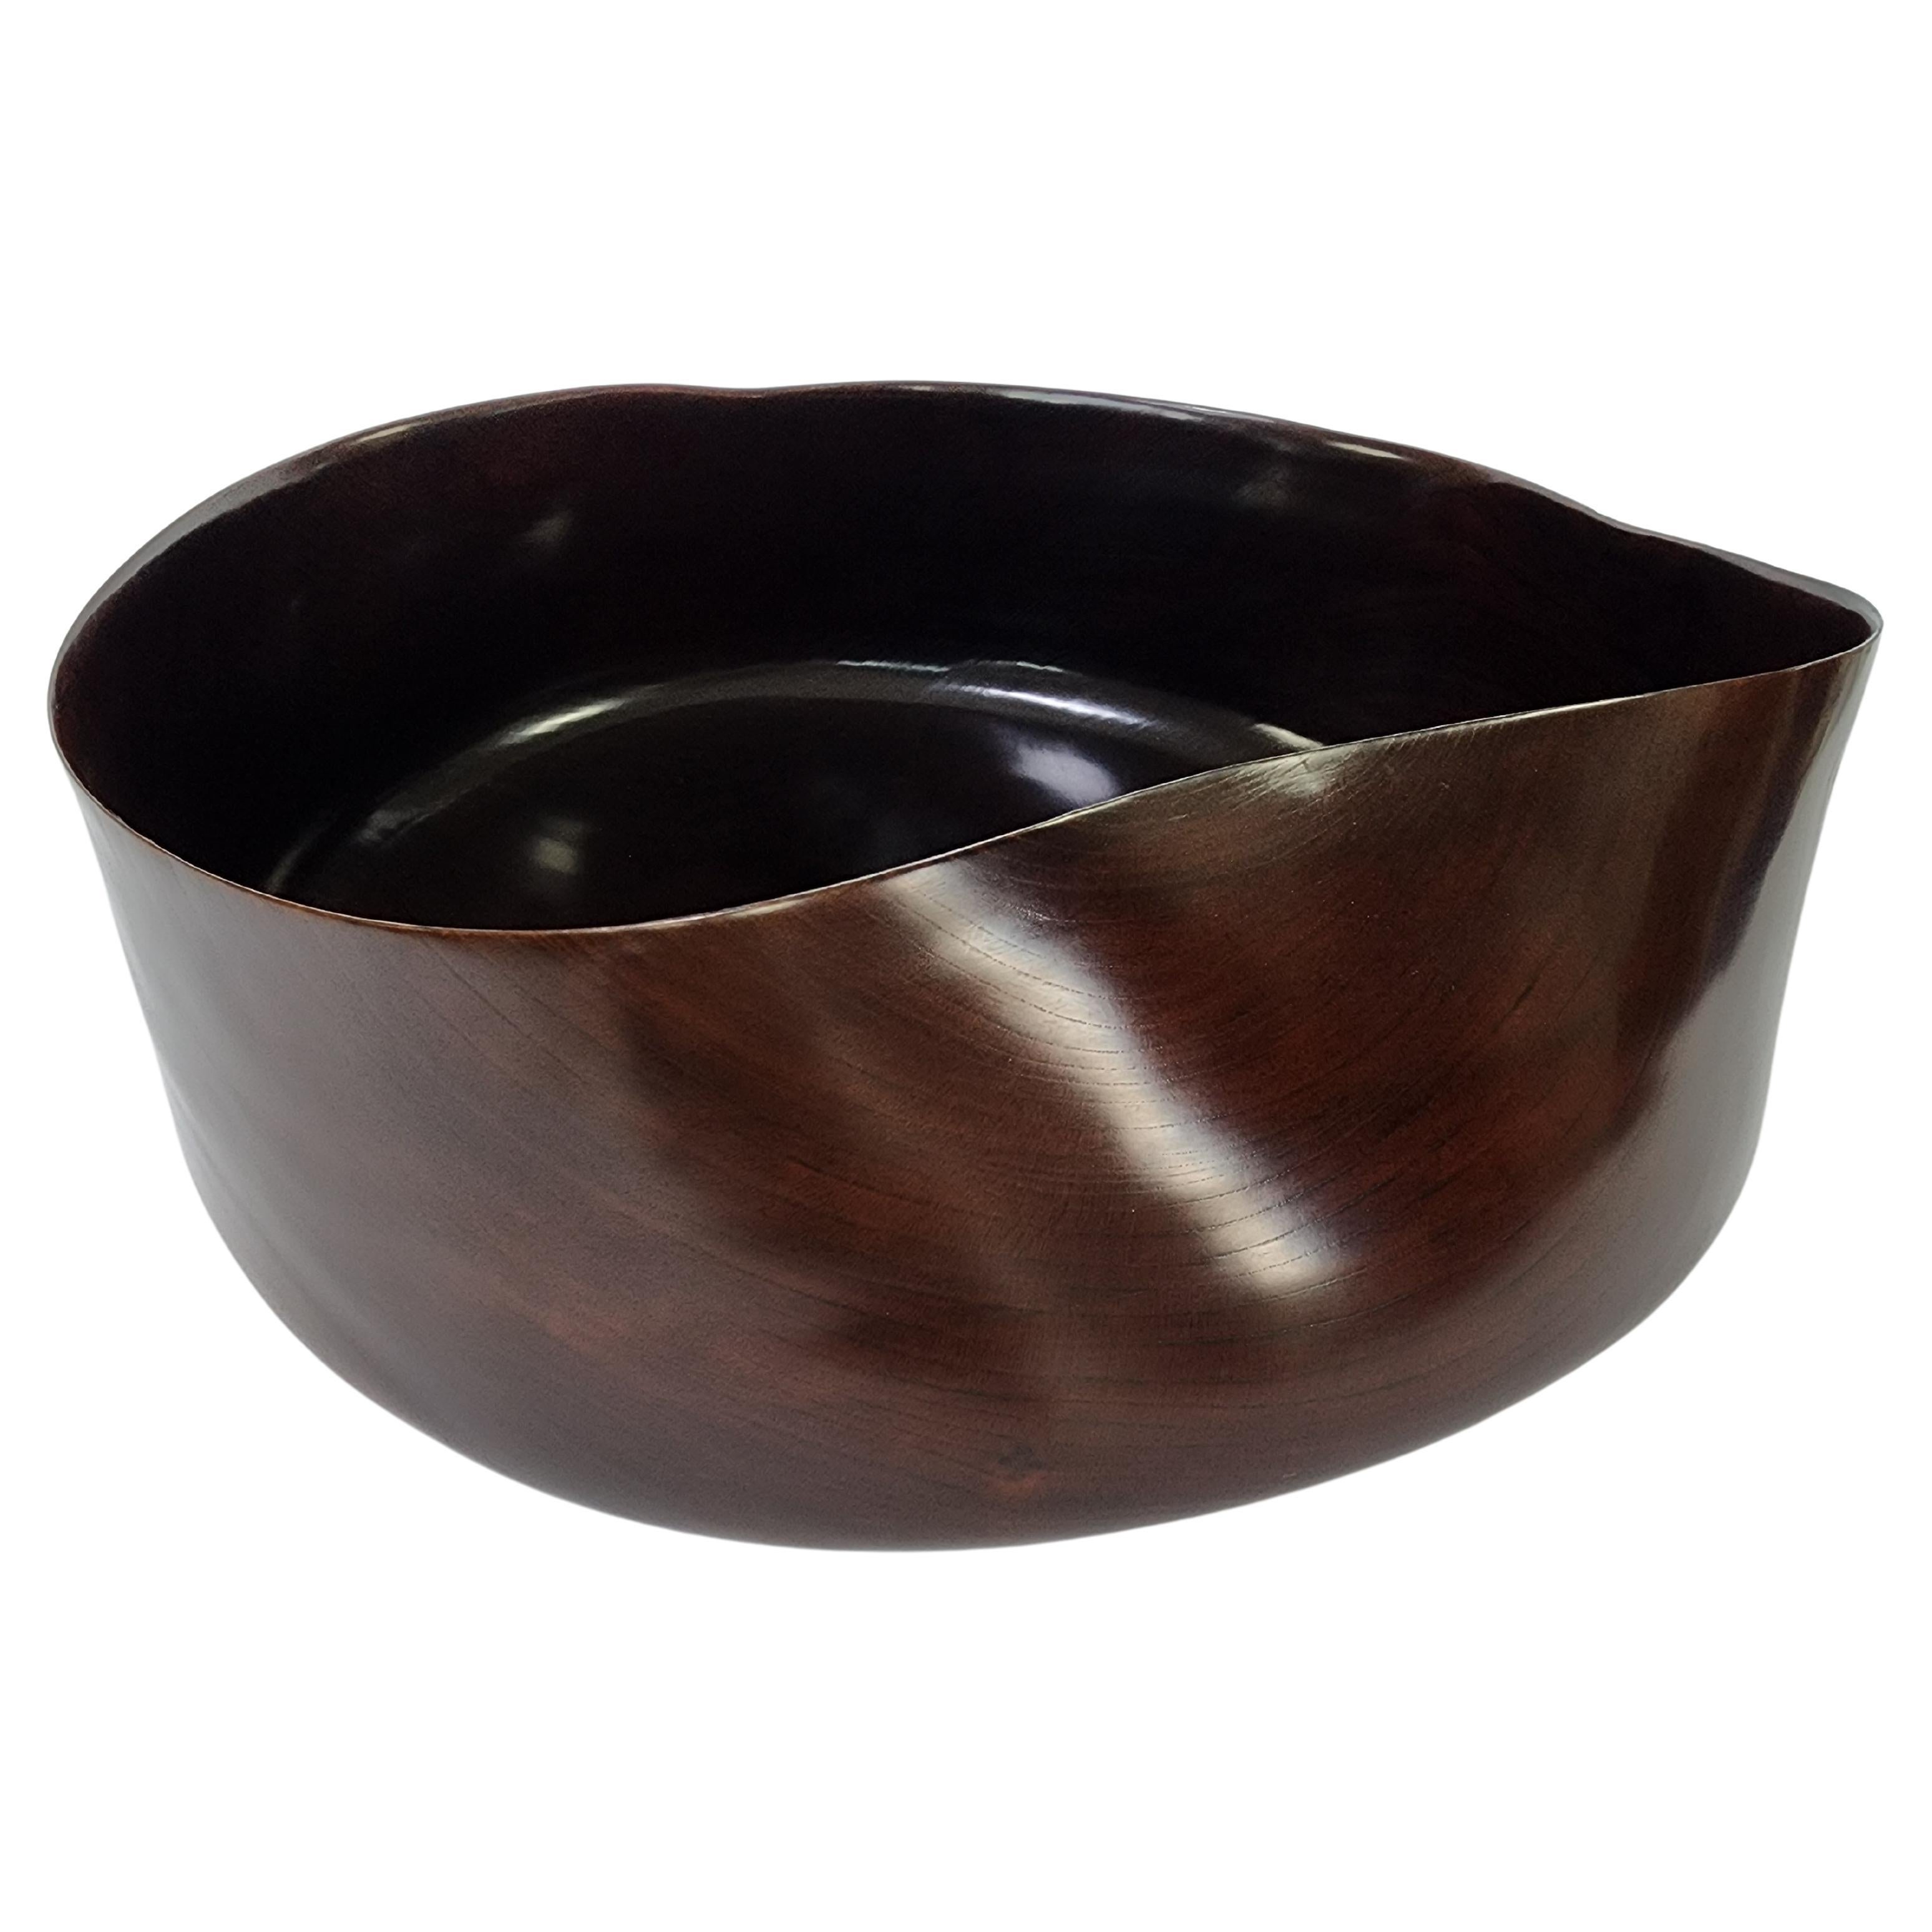 Contemporary For 03 L bowl by Sukkeun Kang For Sale